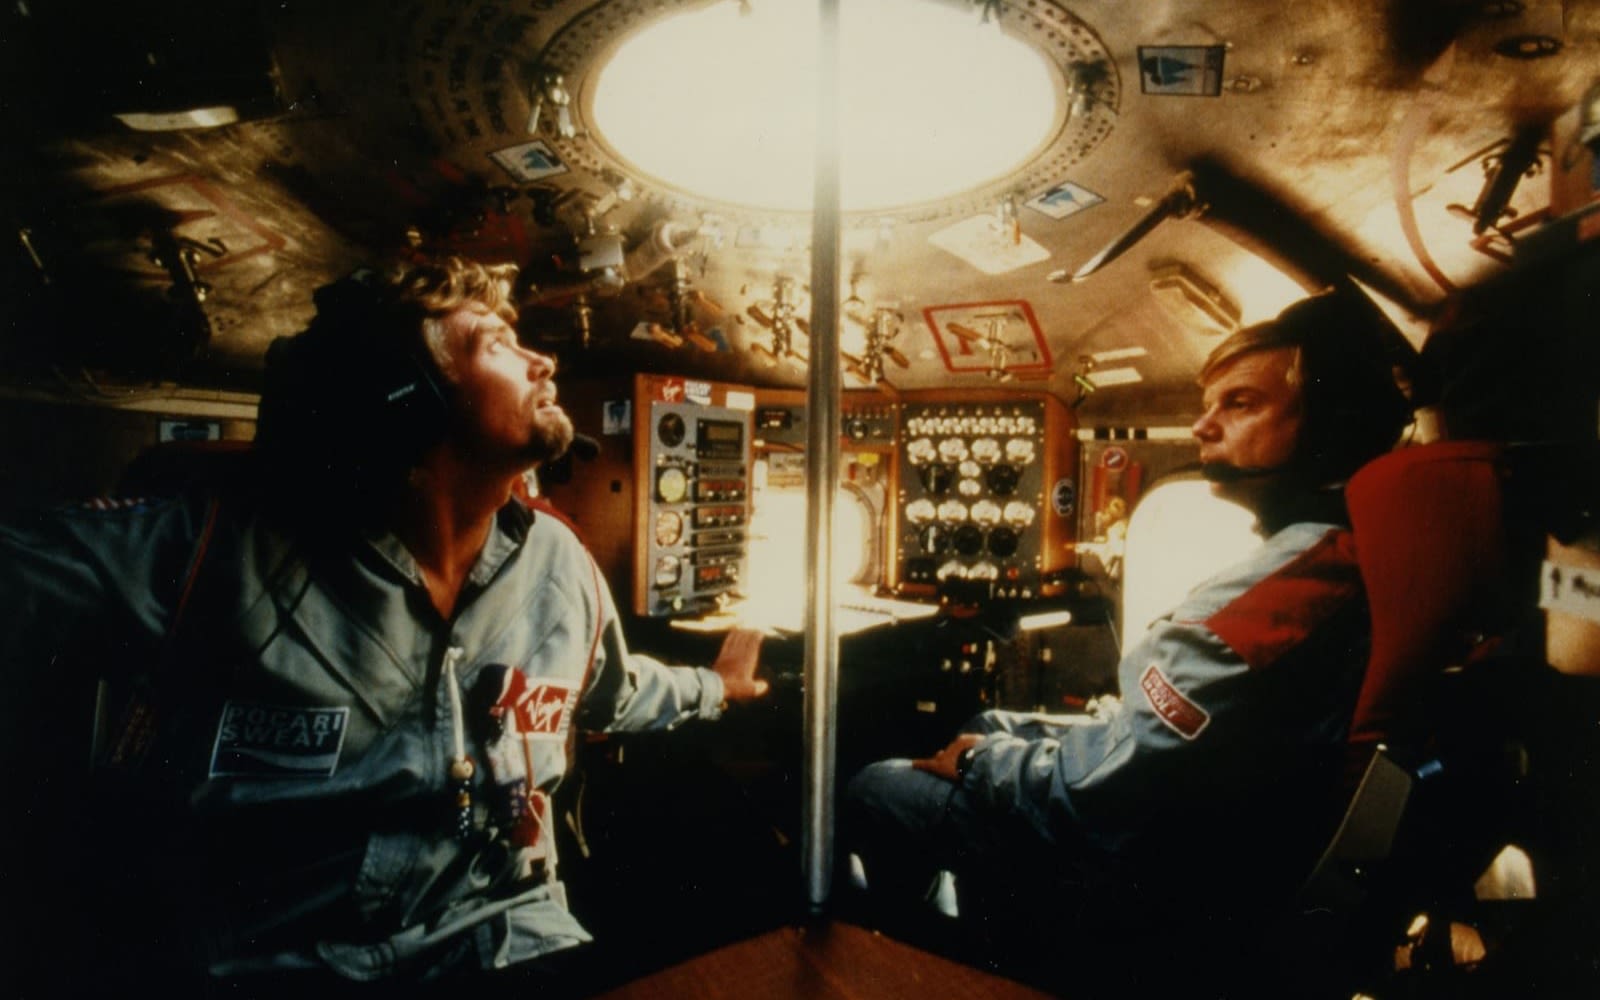 Richard Branson and Per Lindstrand inside a hot air balloon